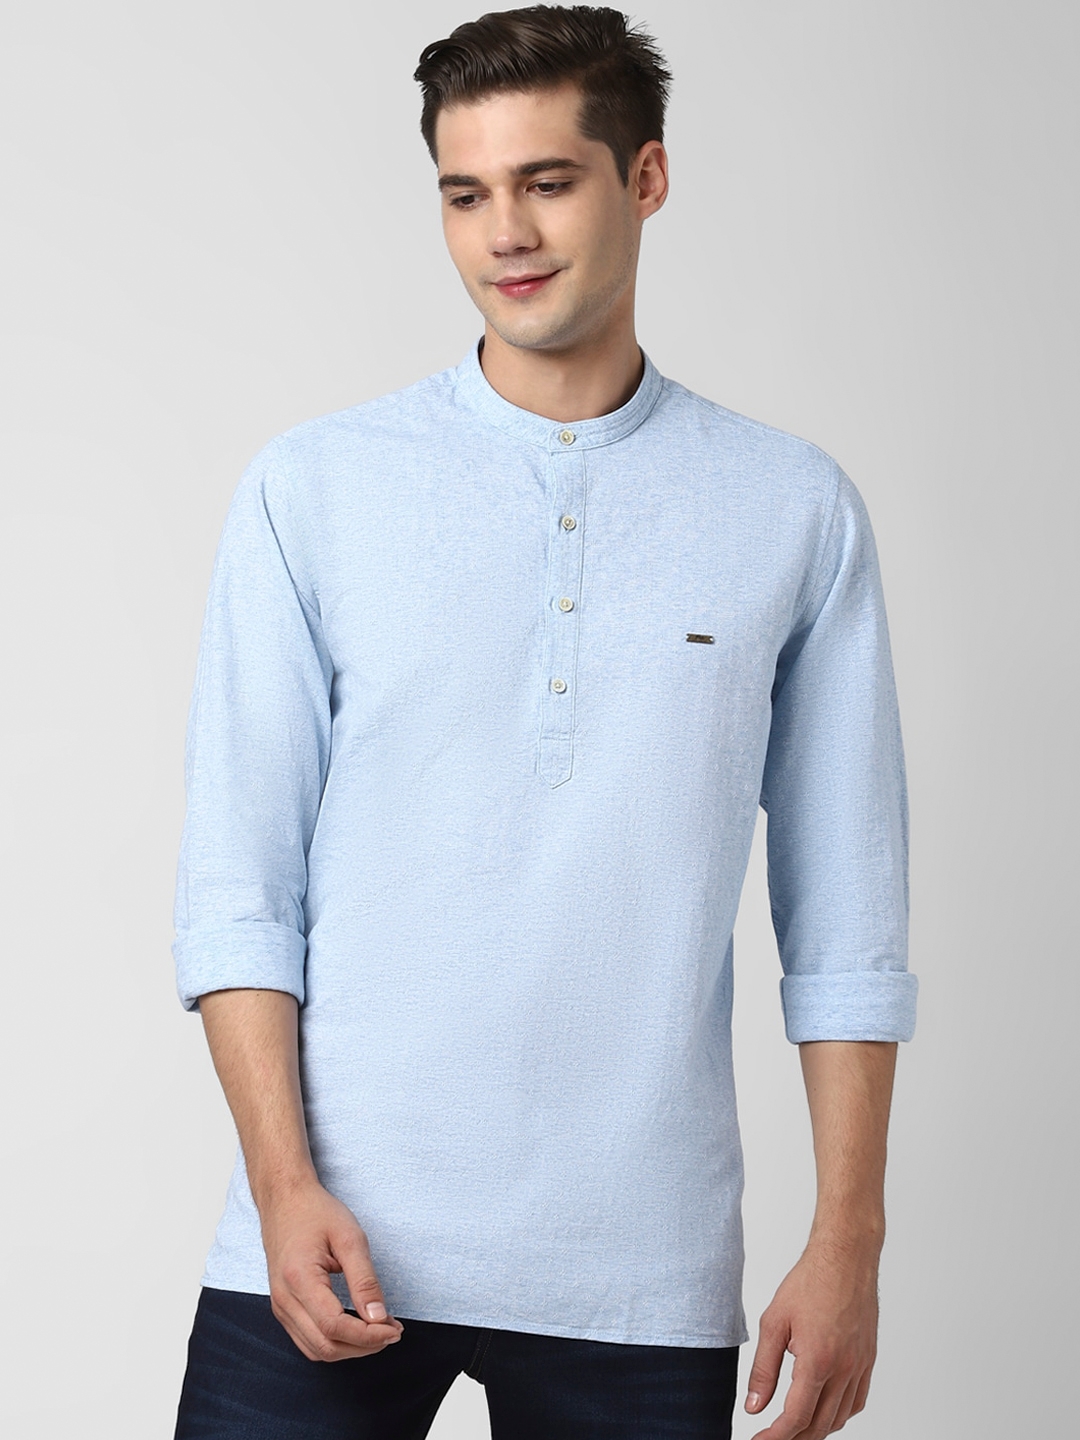 Peter England Casuals Men Blue Self Design Slim Fit Casual Shirt